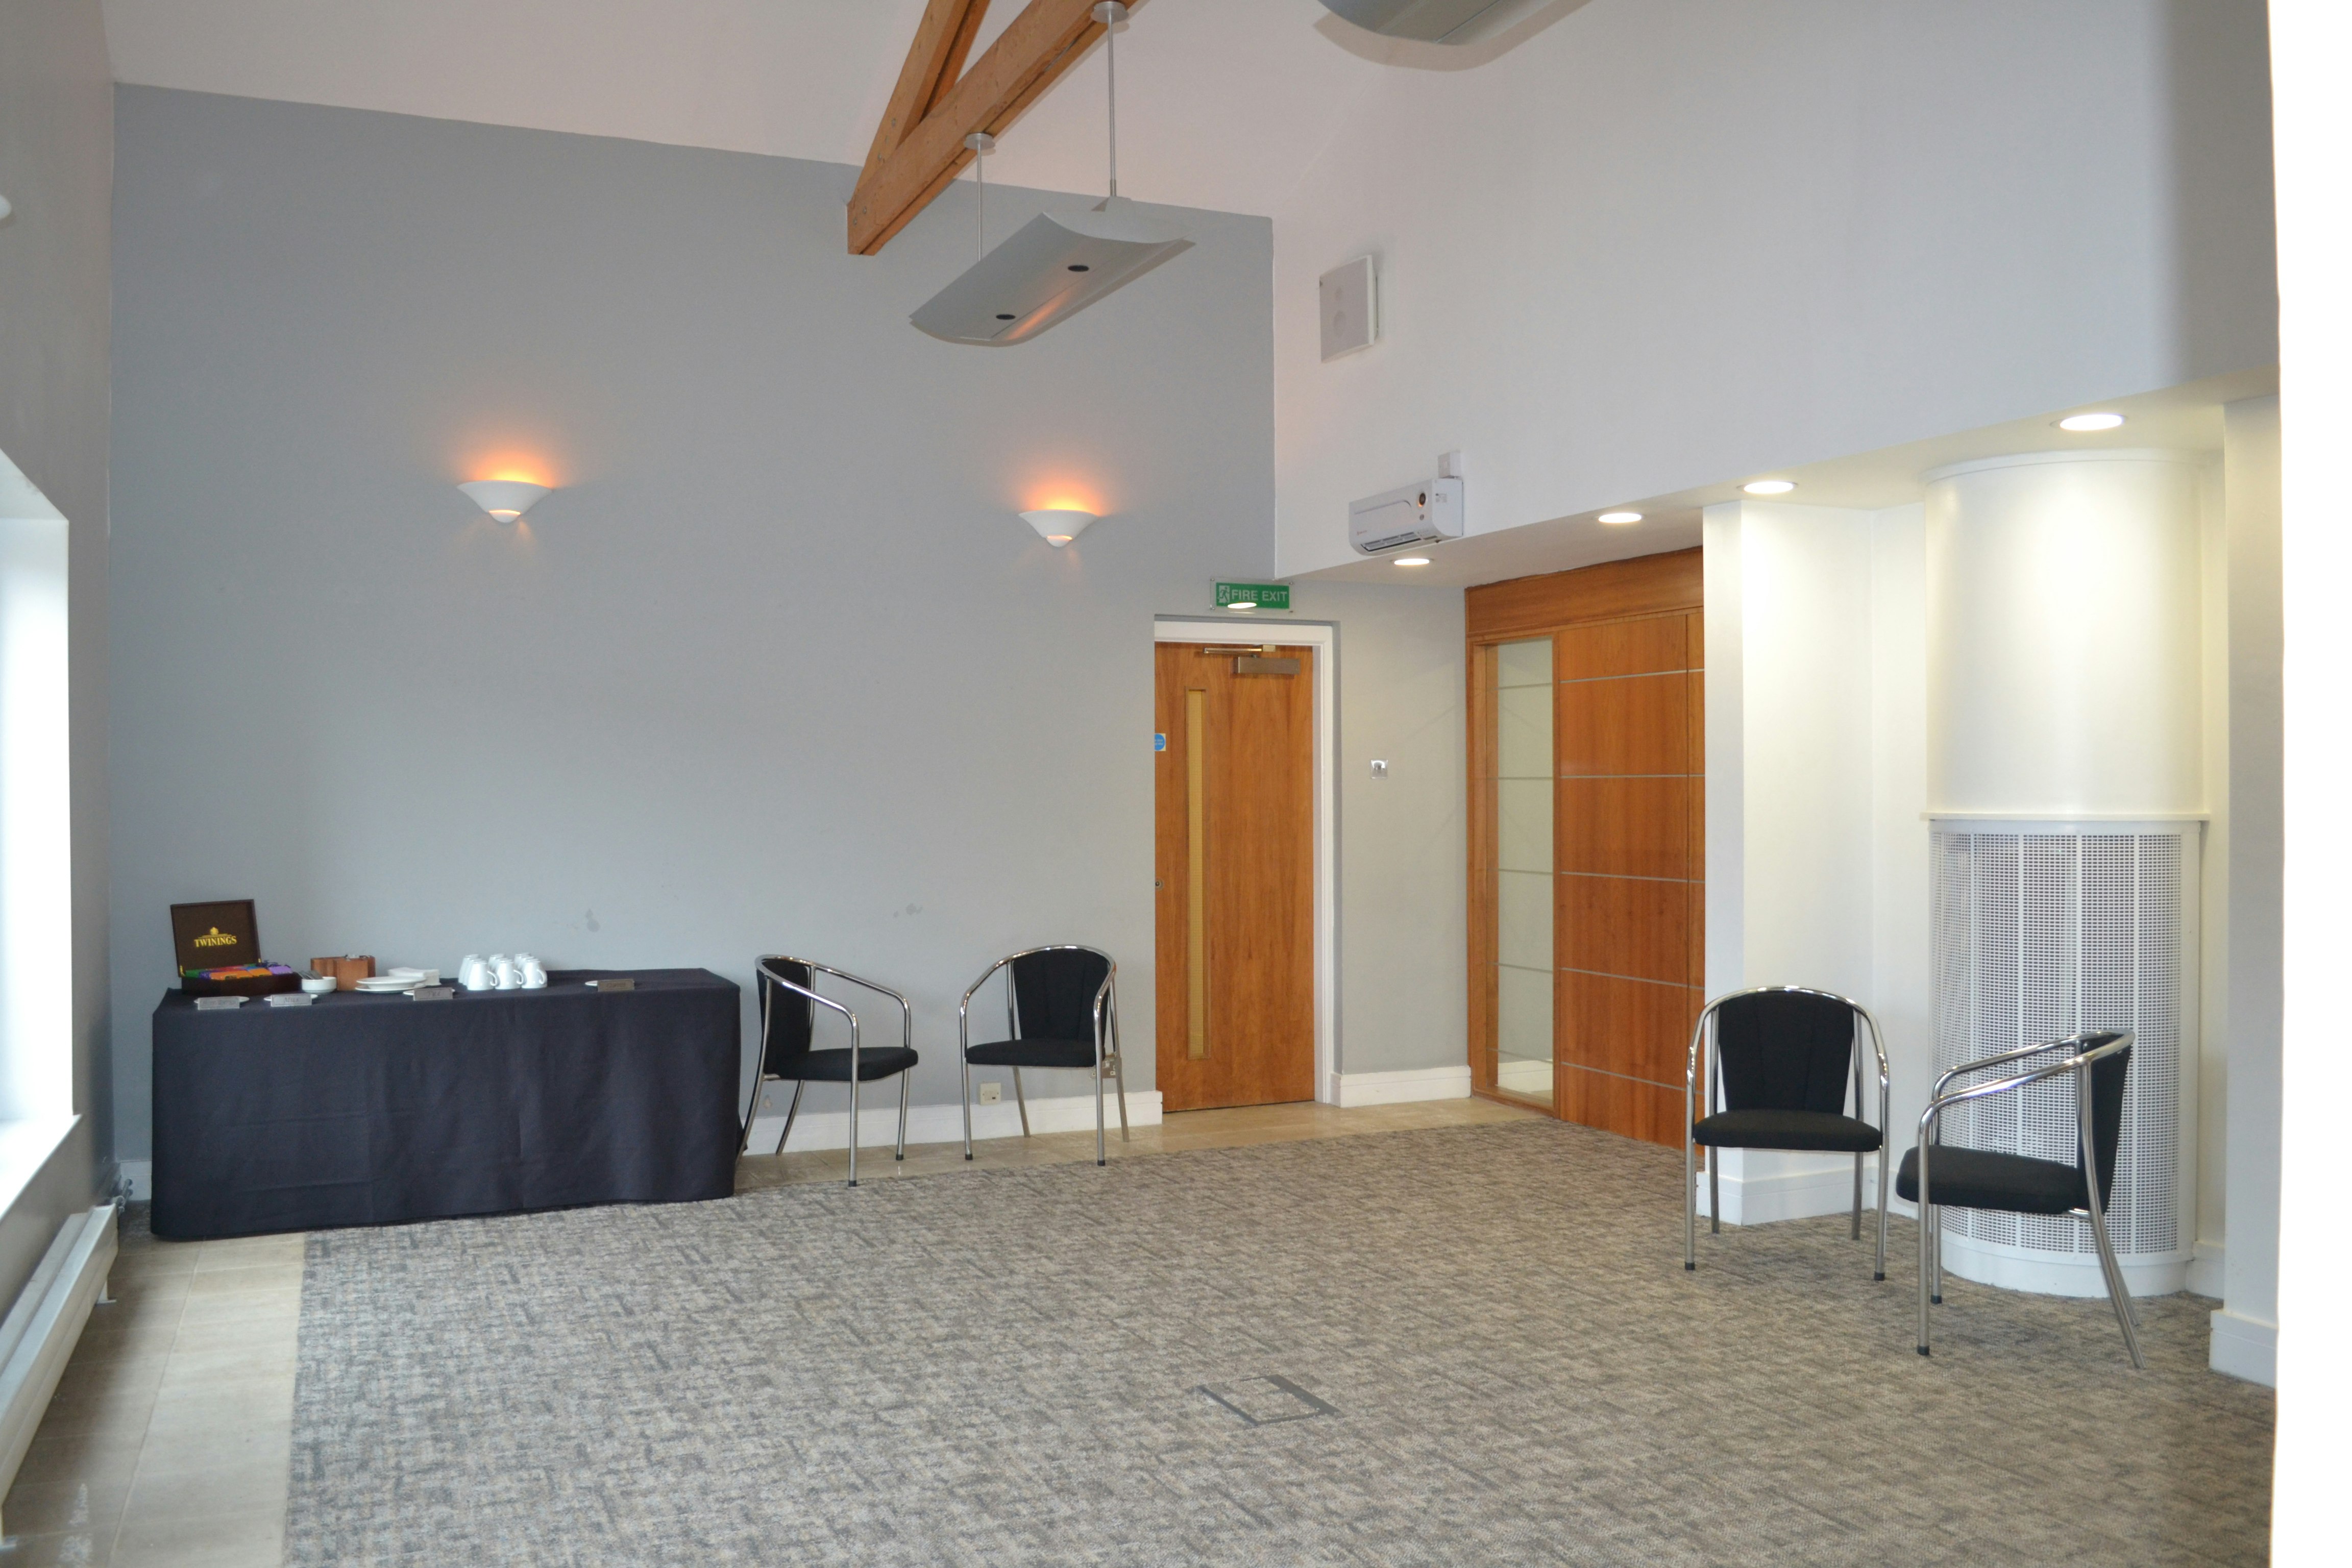 Manchester Conference Centre & Pendulum Hotel - Edgerton Suite image 4